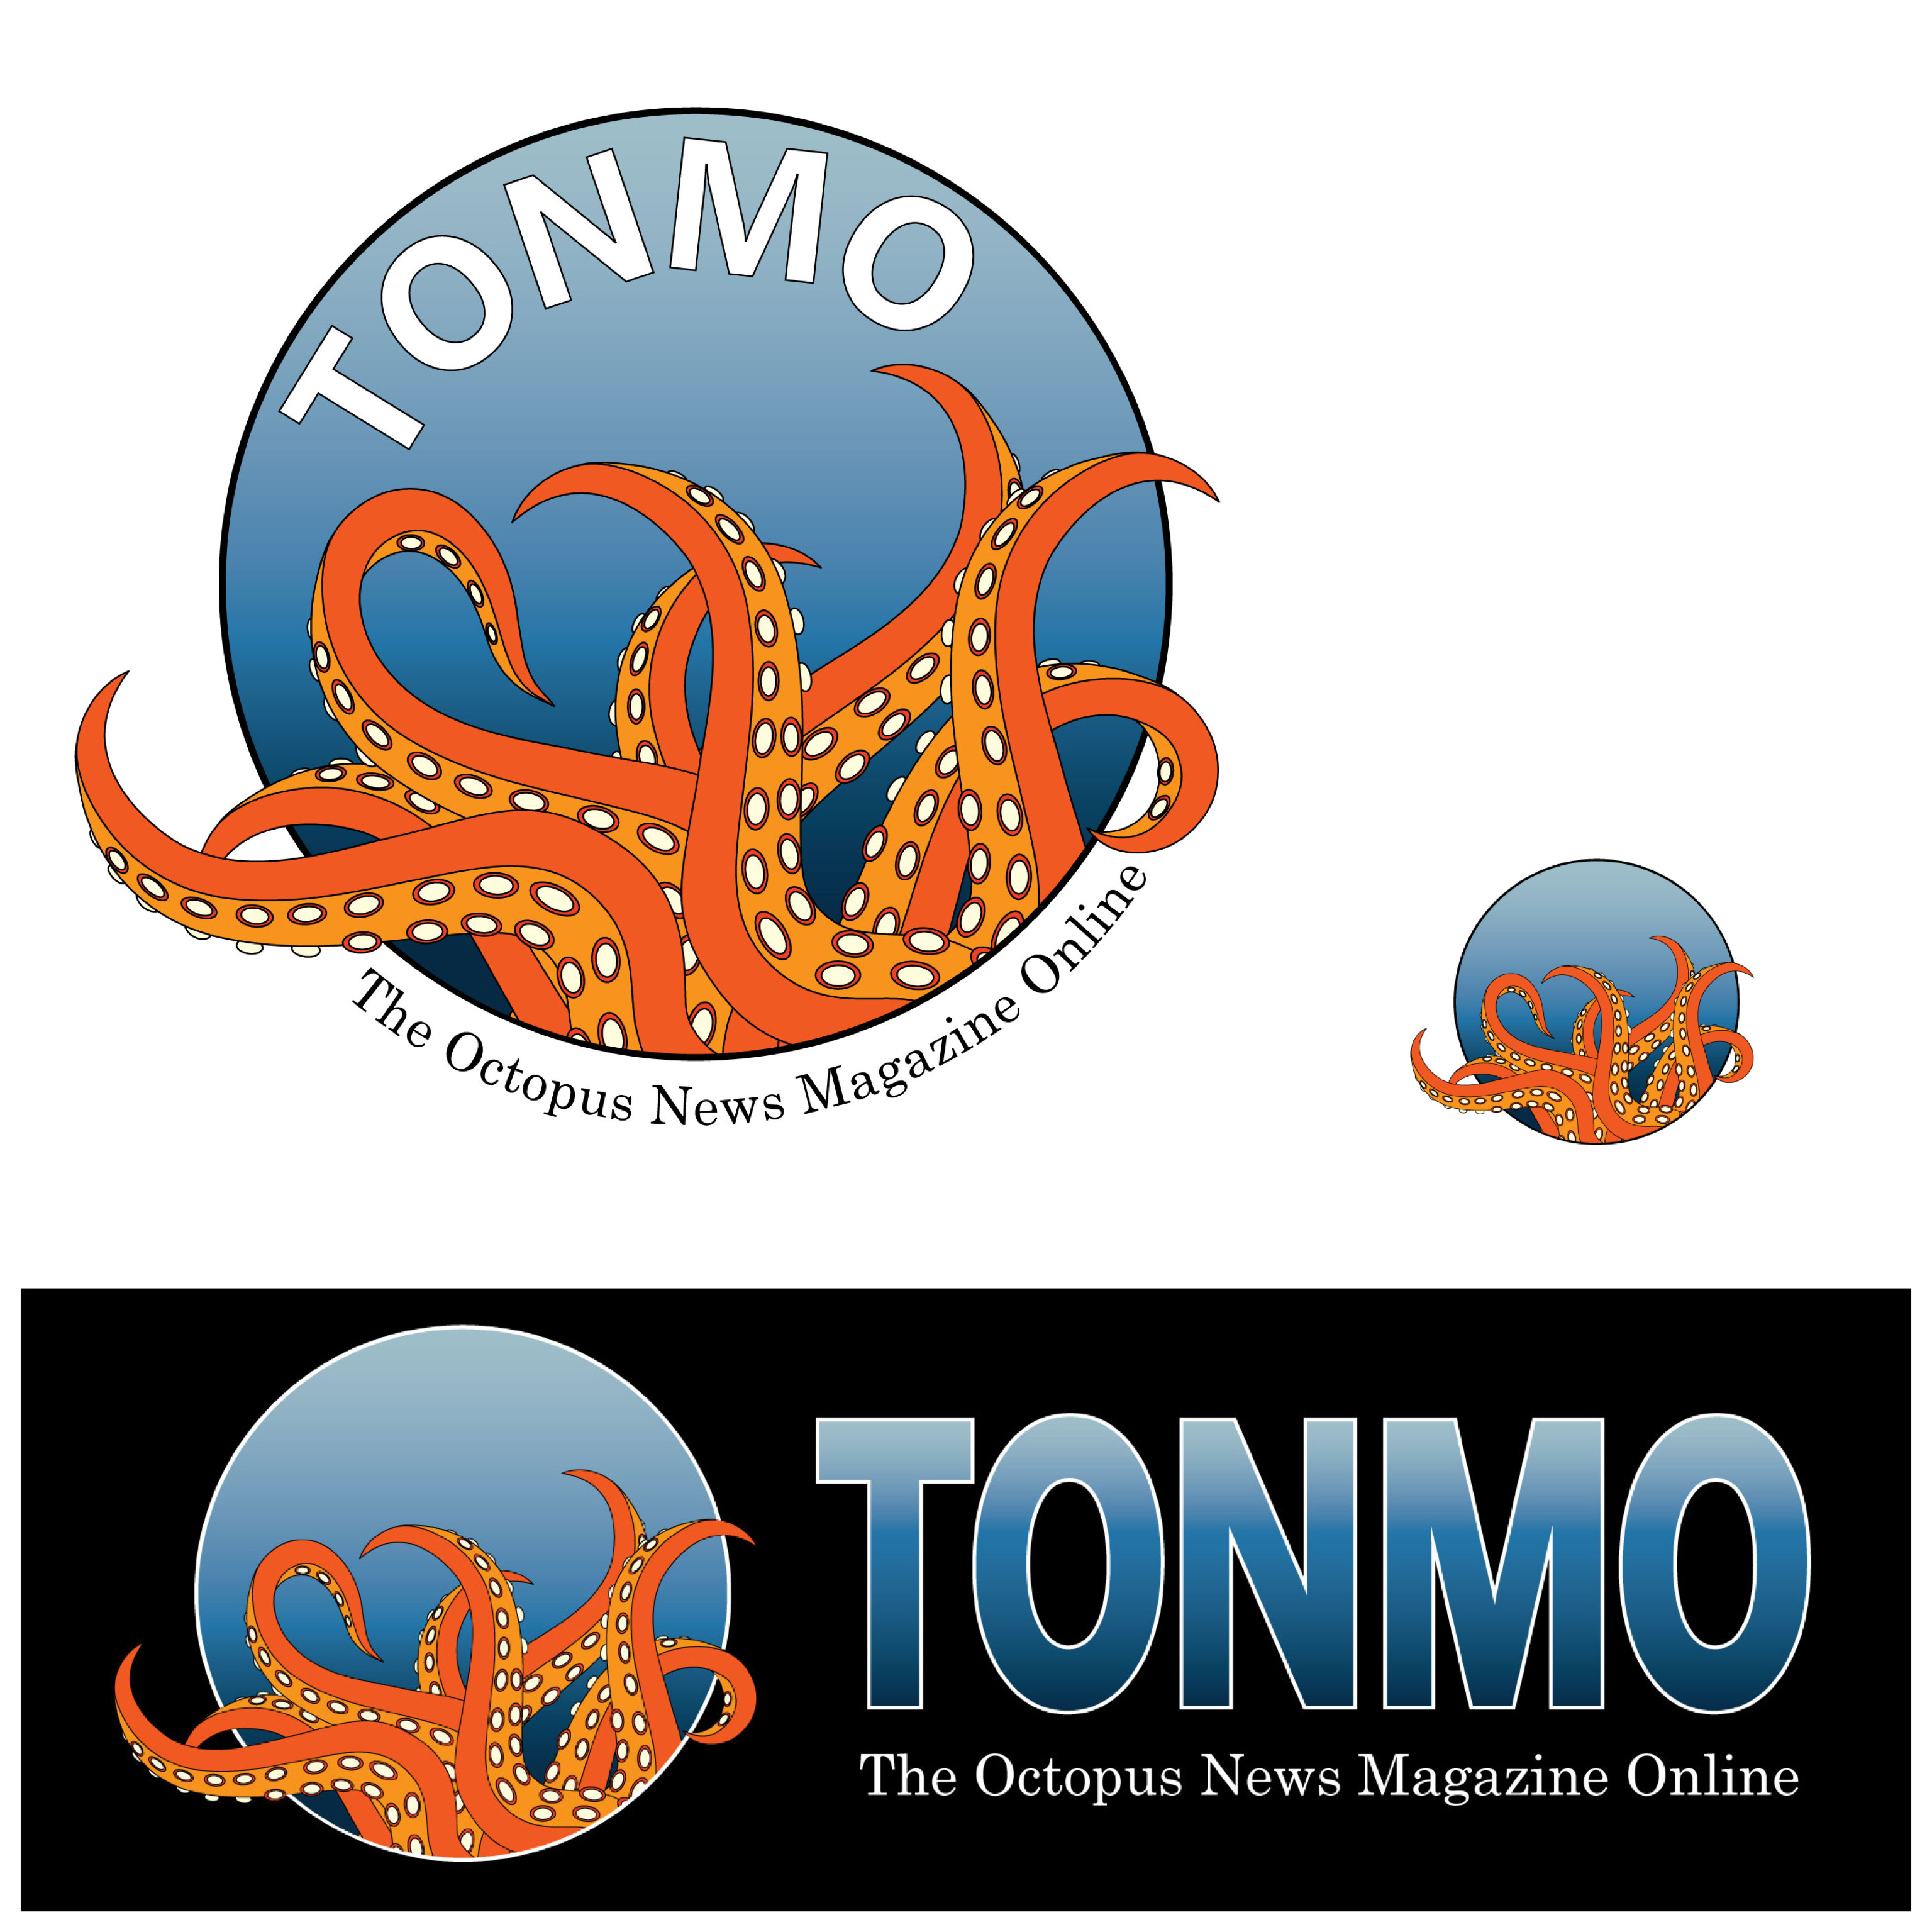 TONMO logo rebranding.jpeg